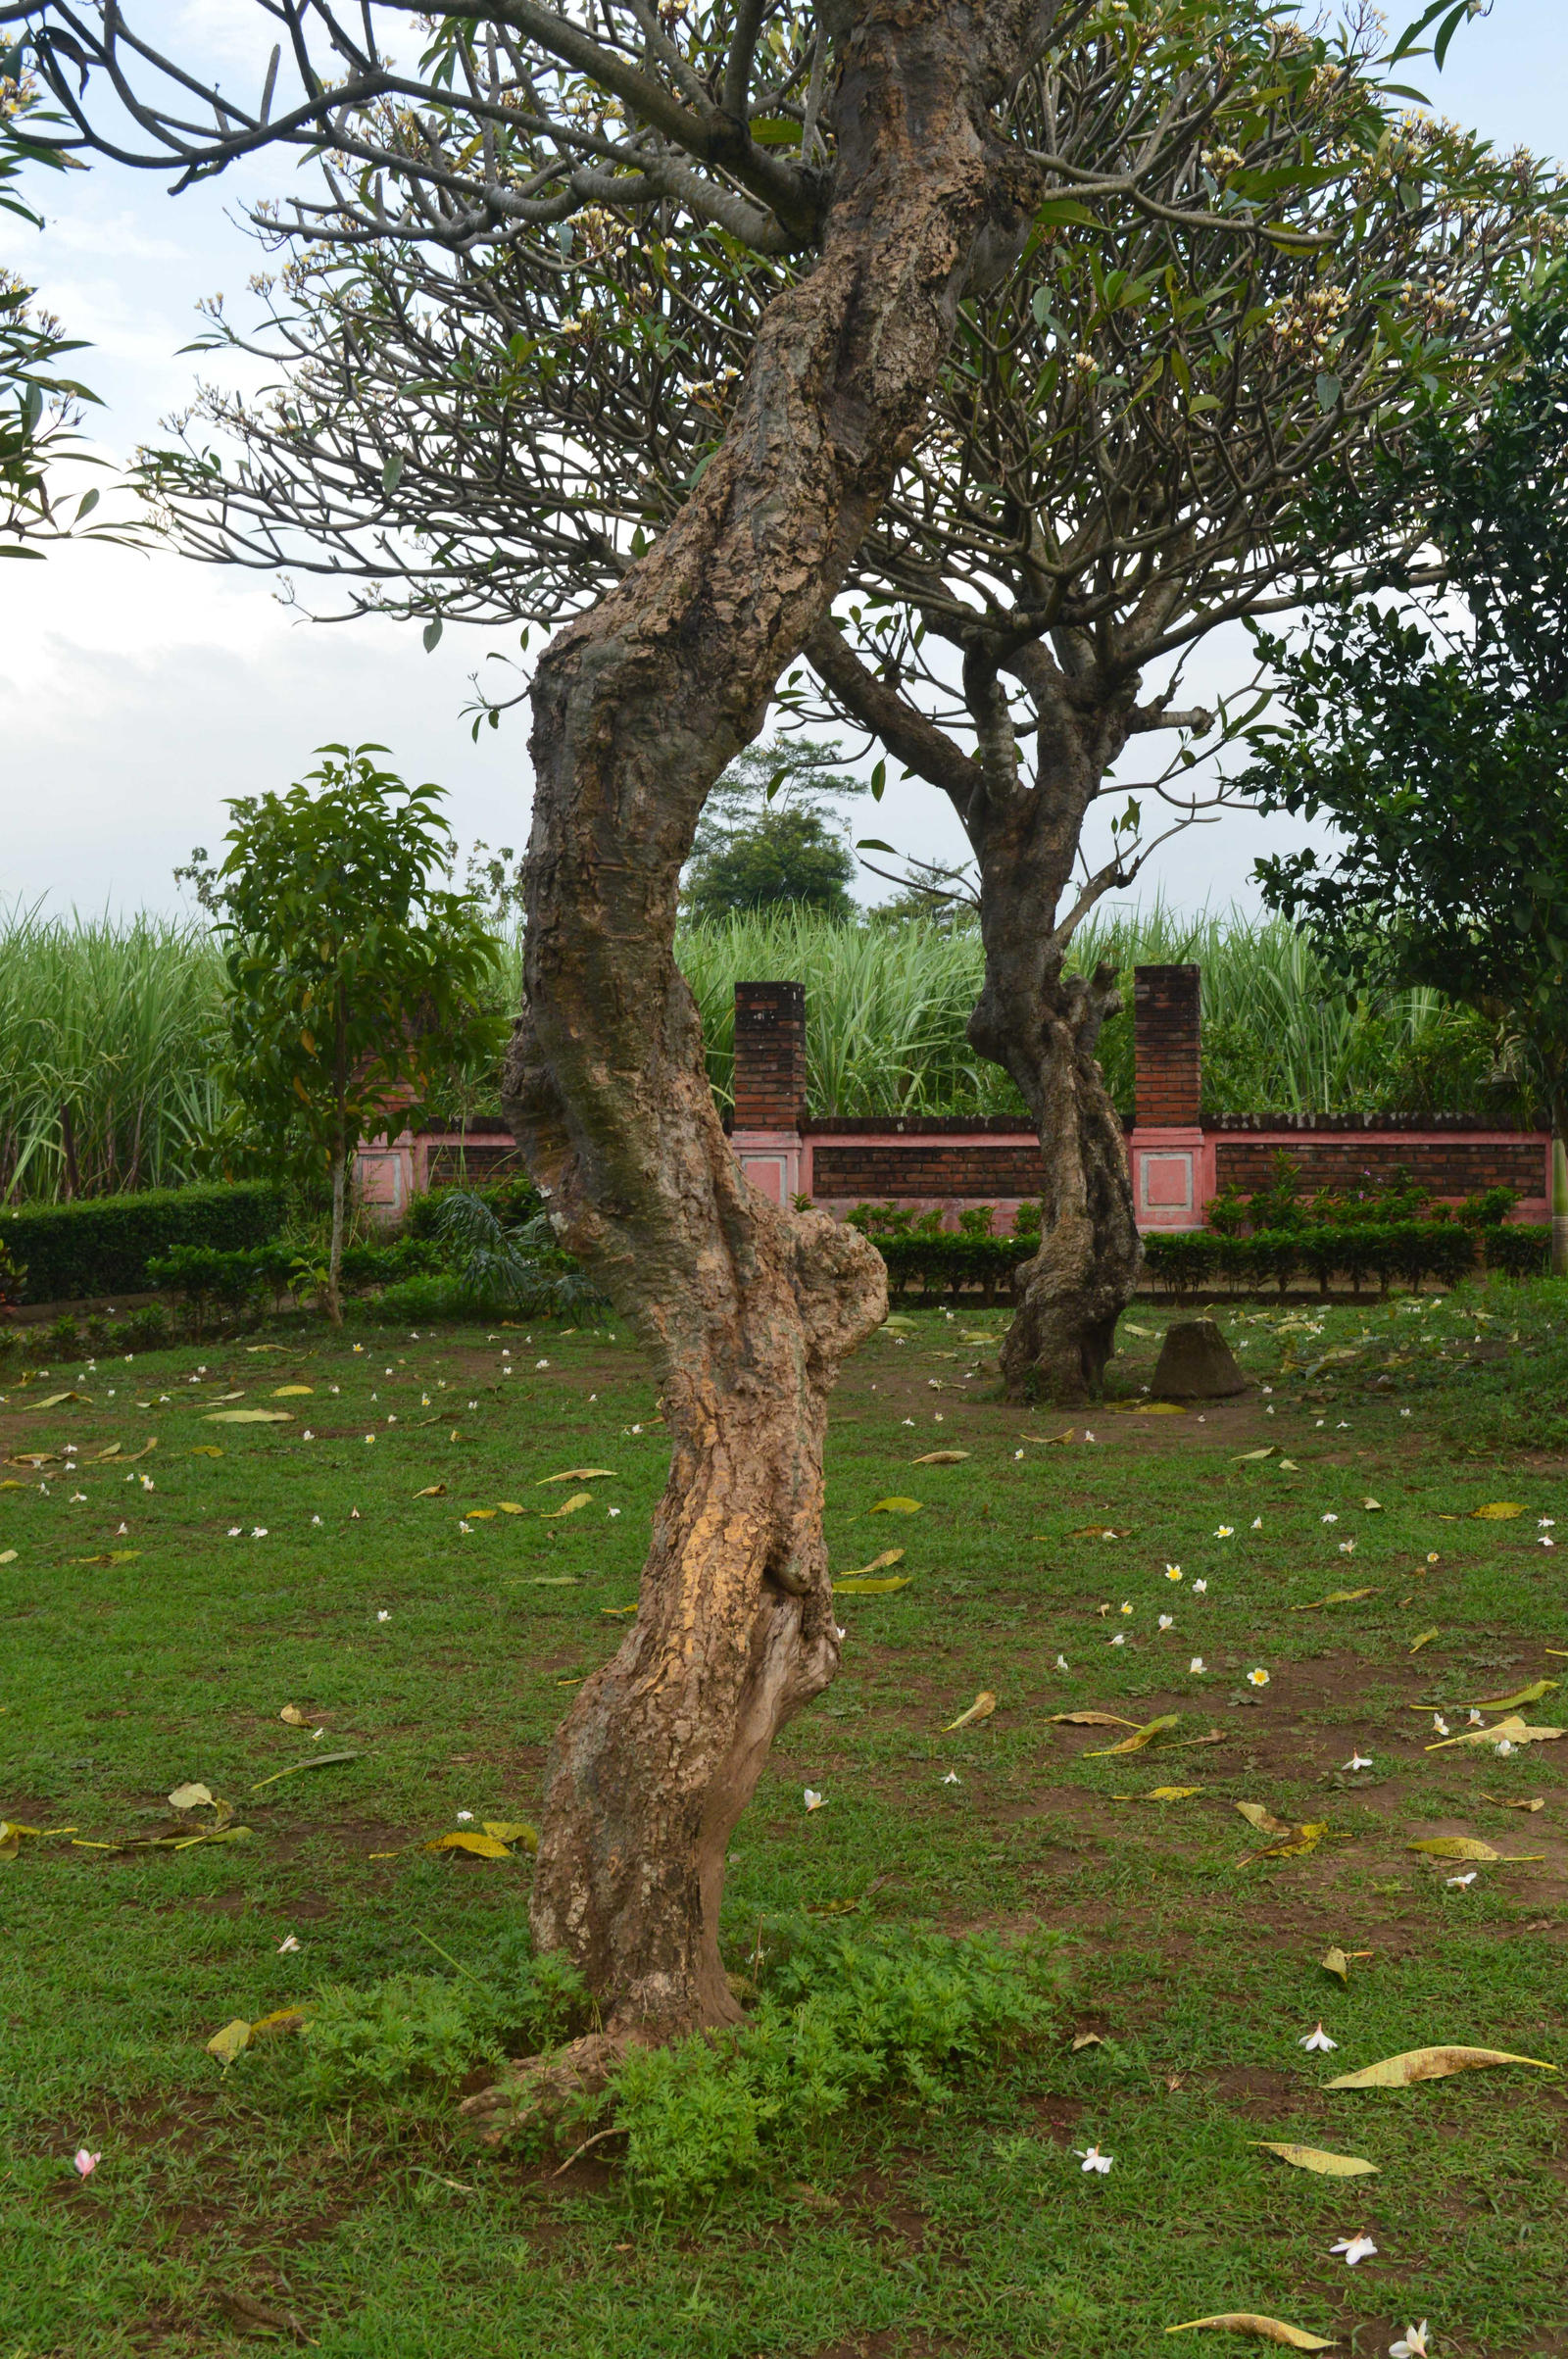 Frangipani Tree2 By Adipancawh